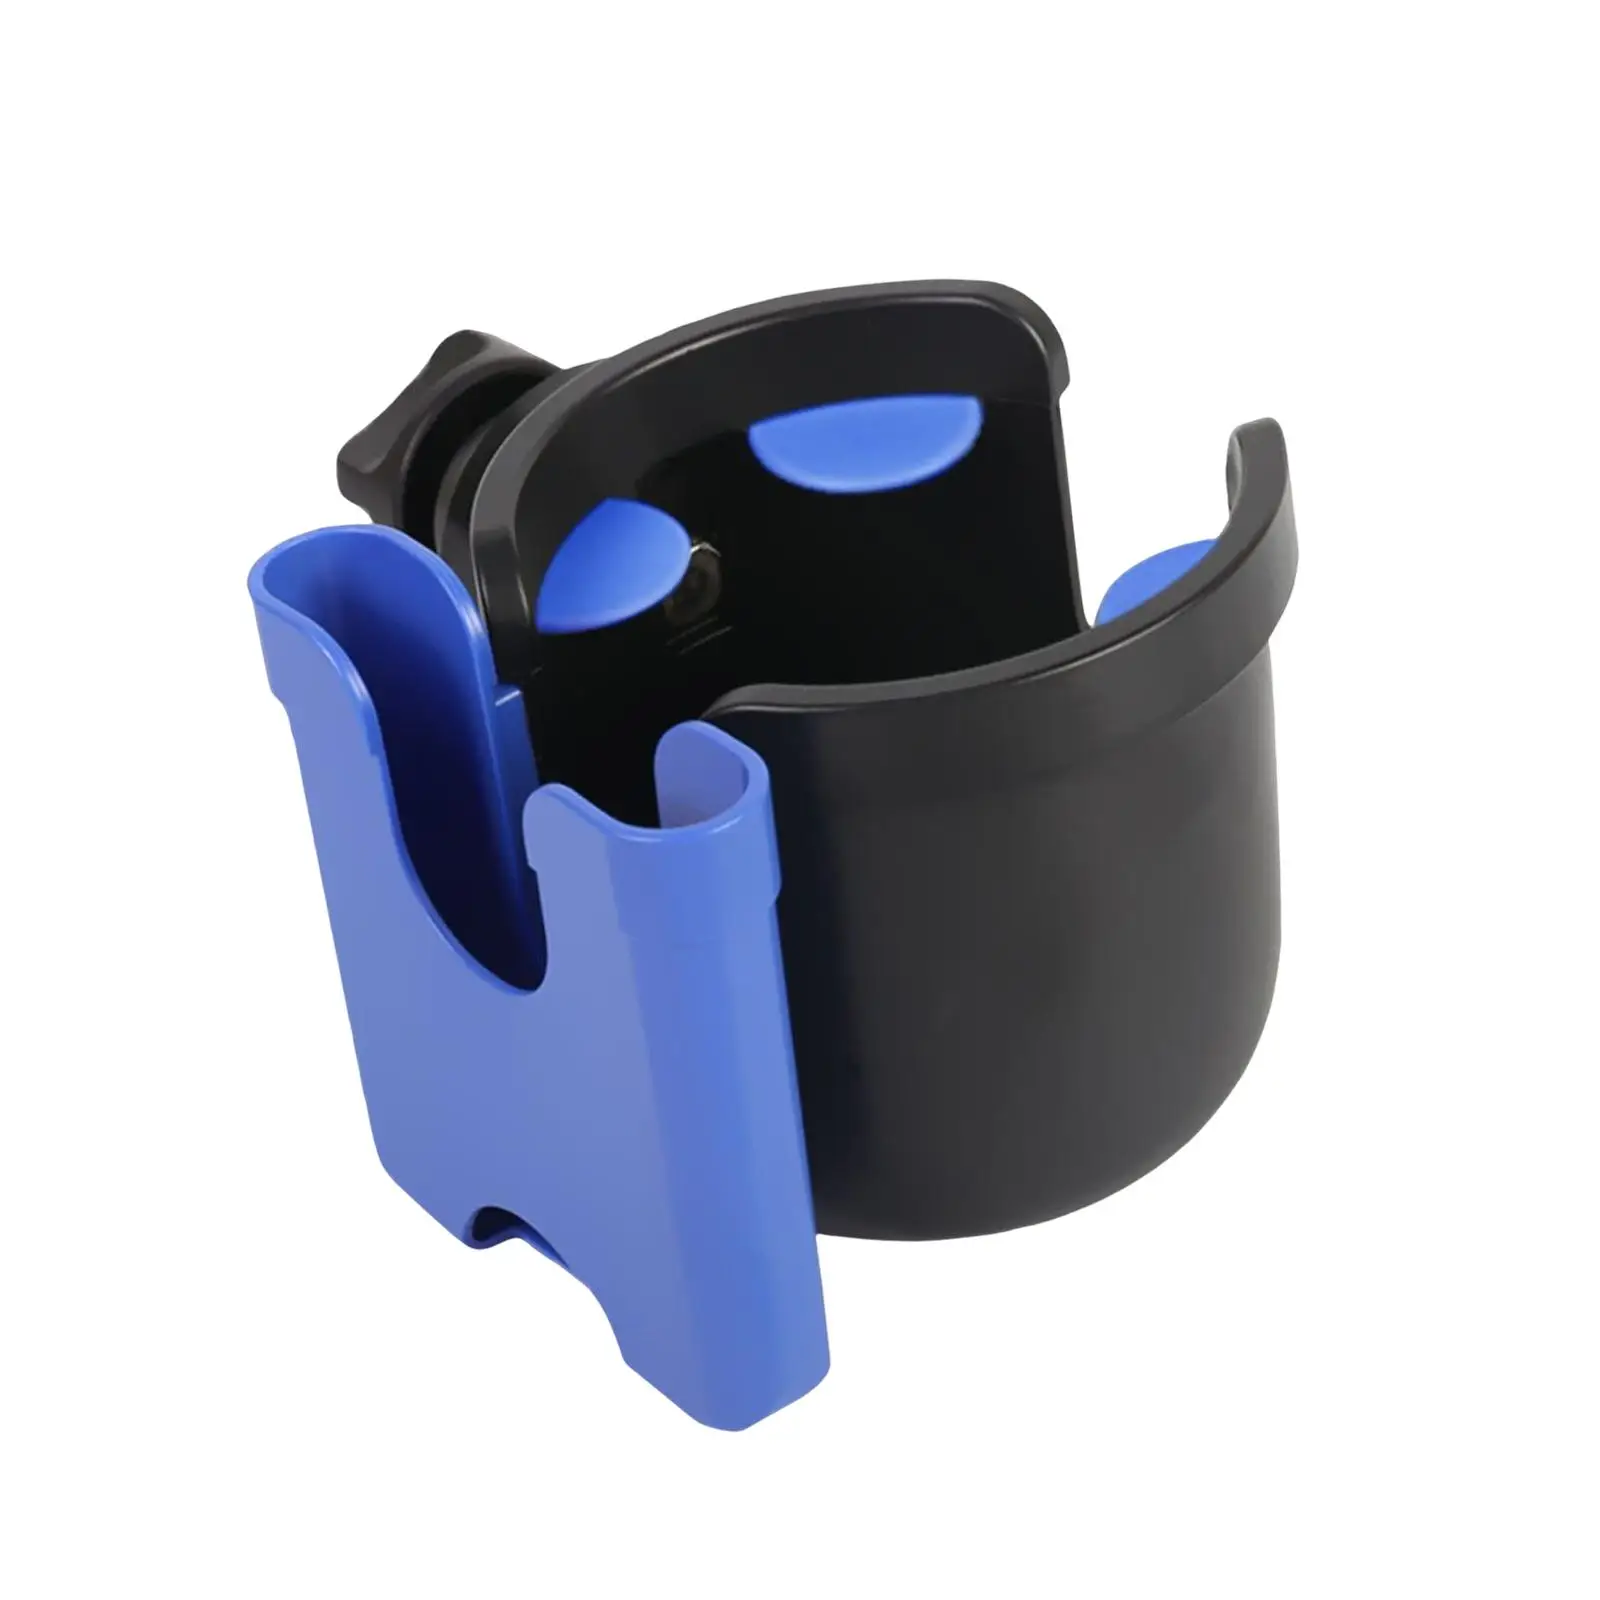 Universal Stroller Cup Holder Water Bottle Holder Vacuum Cup Holder for Stroller Pushchair Pram